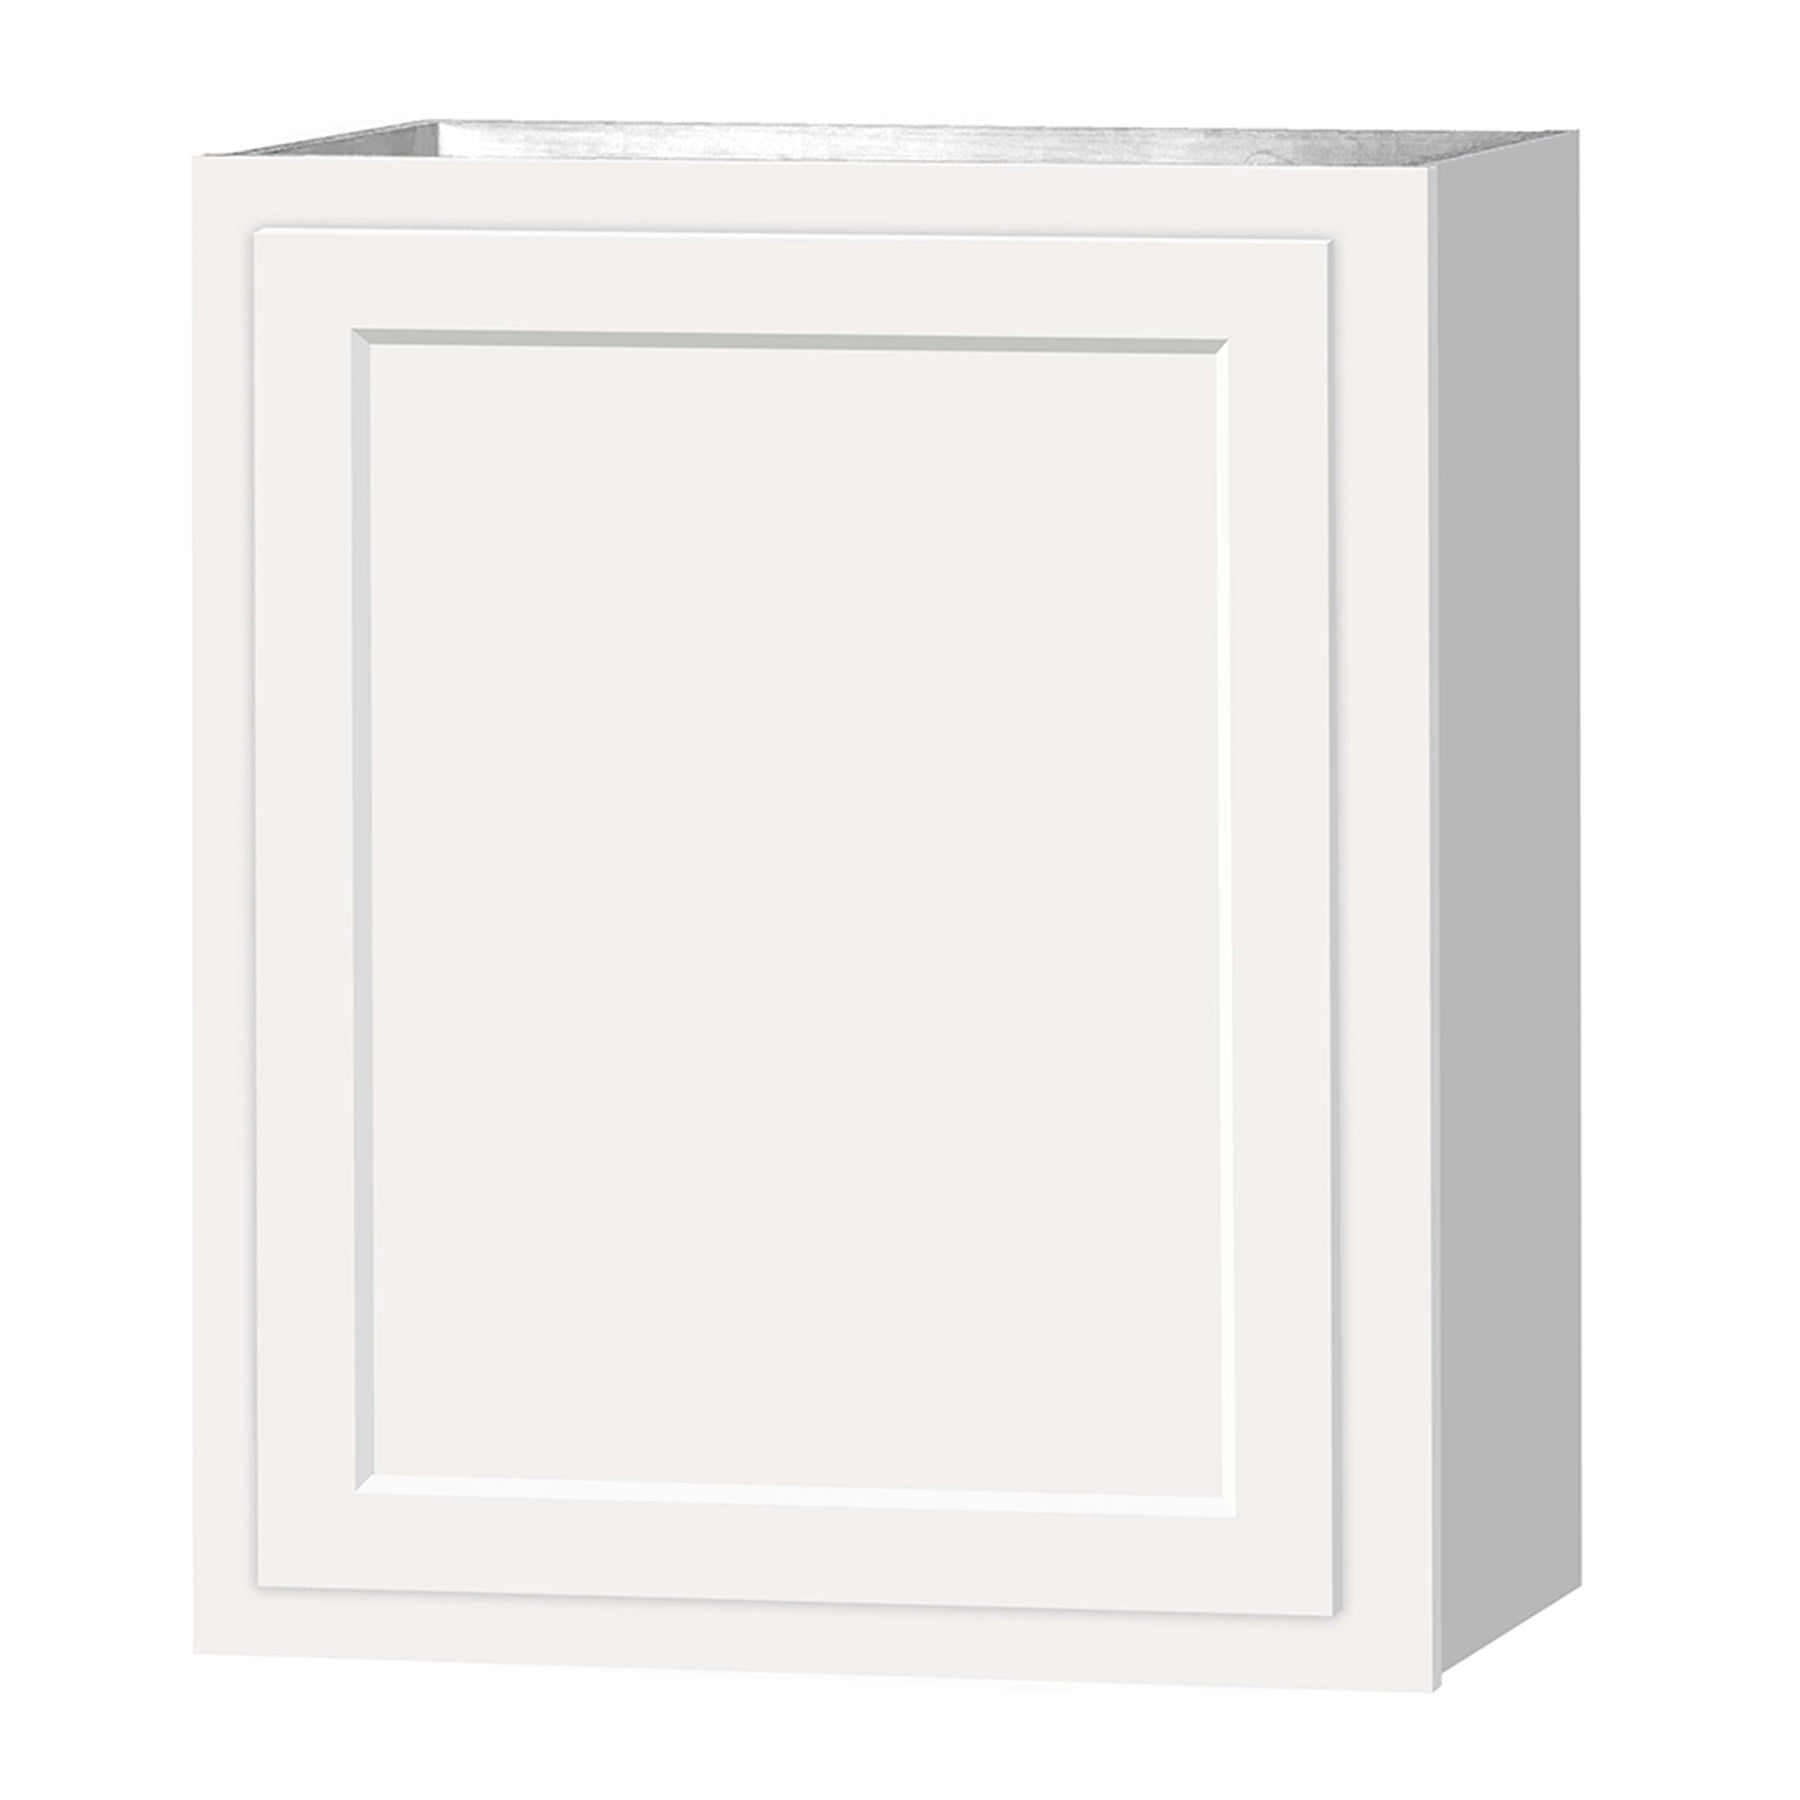 30 inch Wall Cabinets - Single Door - Dwhite Shaker - 24 Inch W x 30 Inch H x 12 Inch D